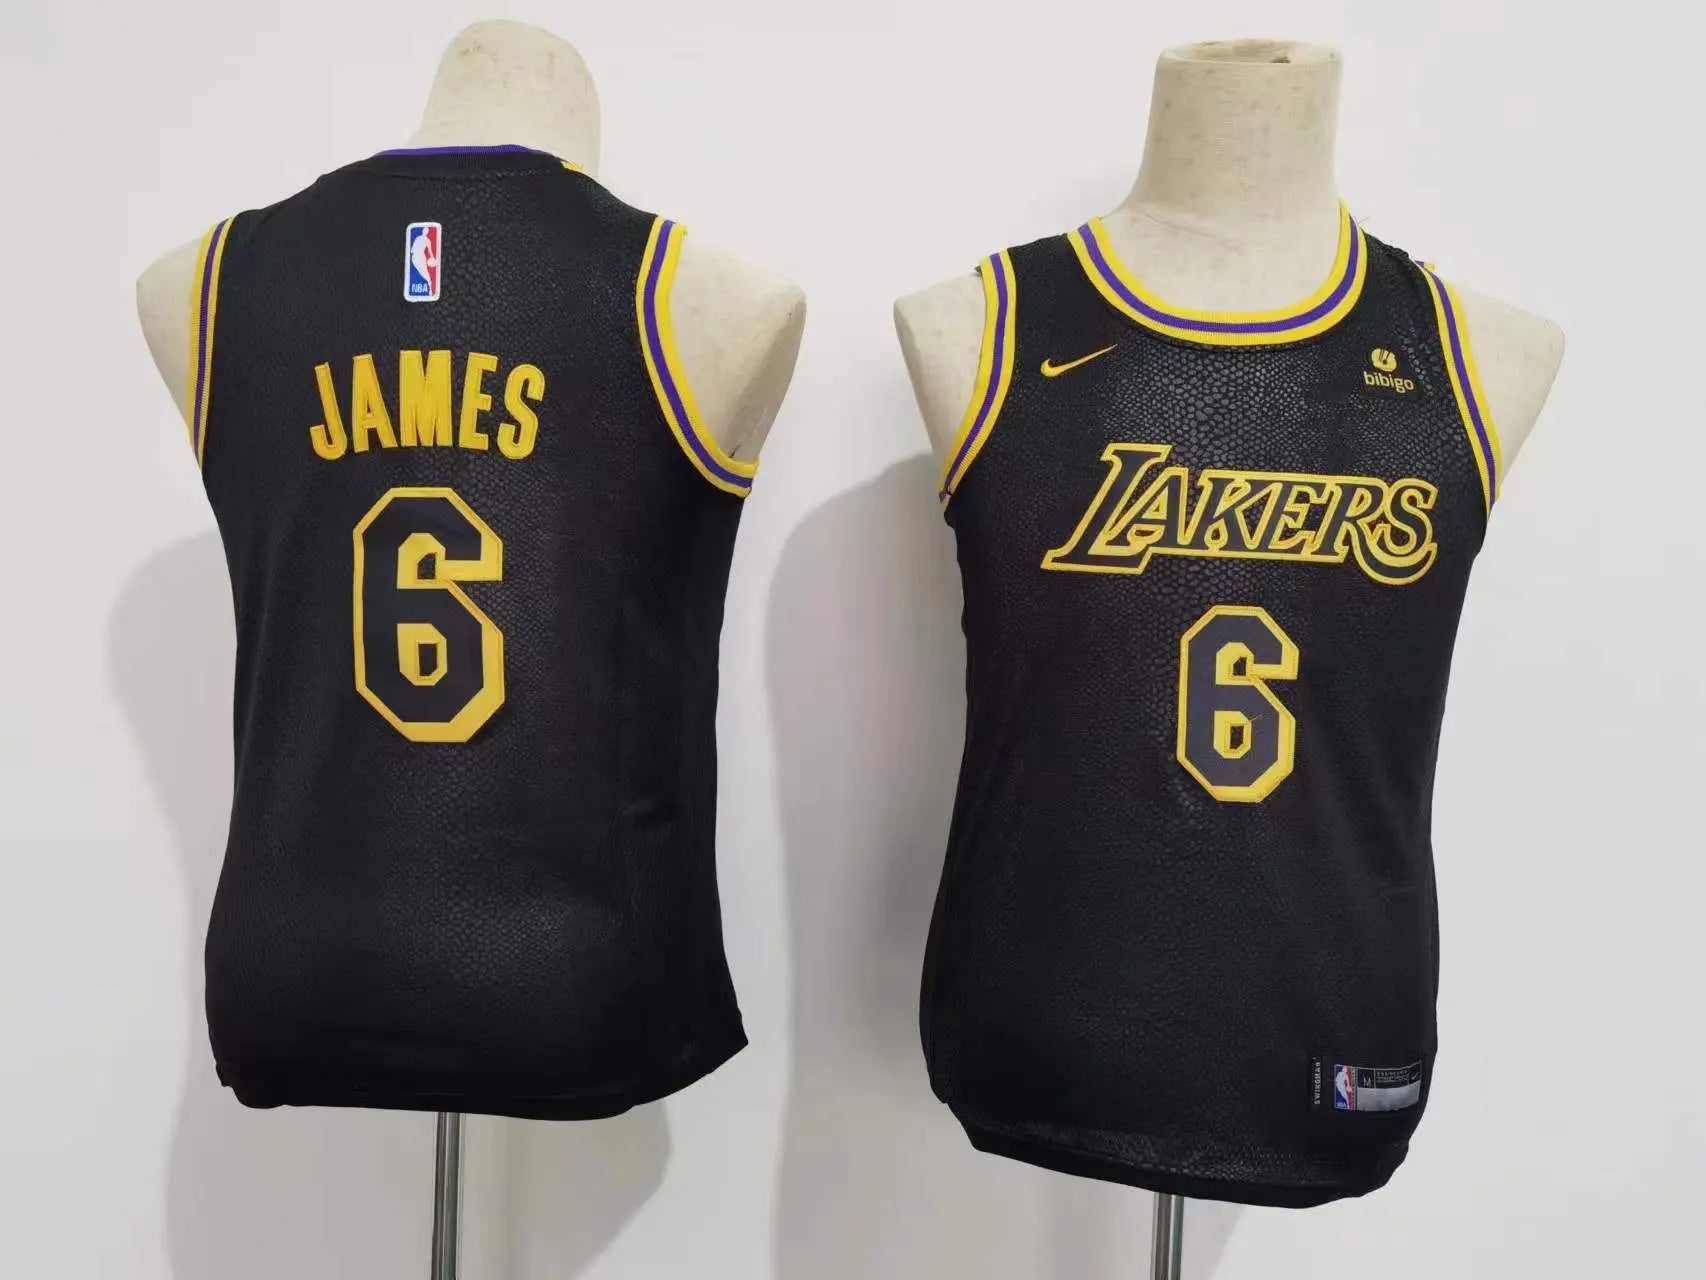 Kids Los Angeles Lakers James NO.6 Basketball Jersey jerseyworlds